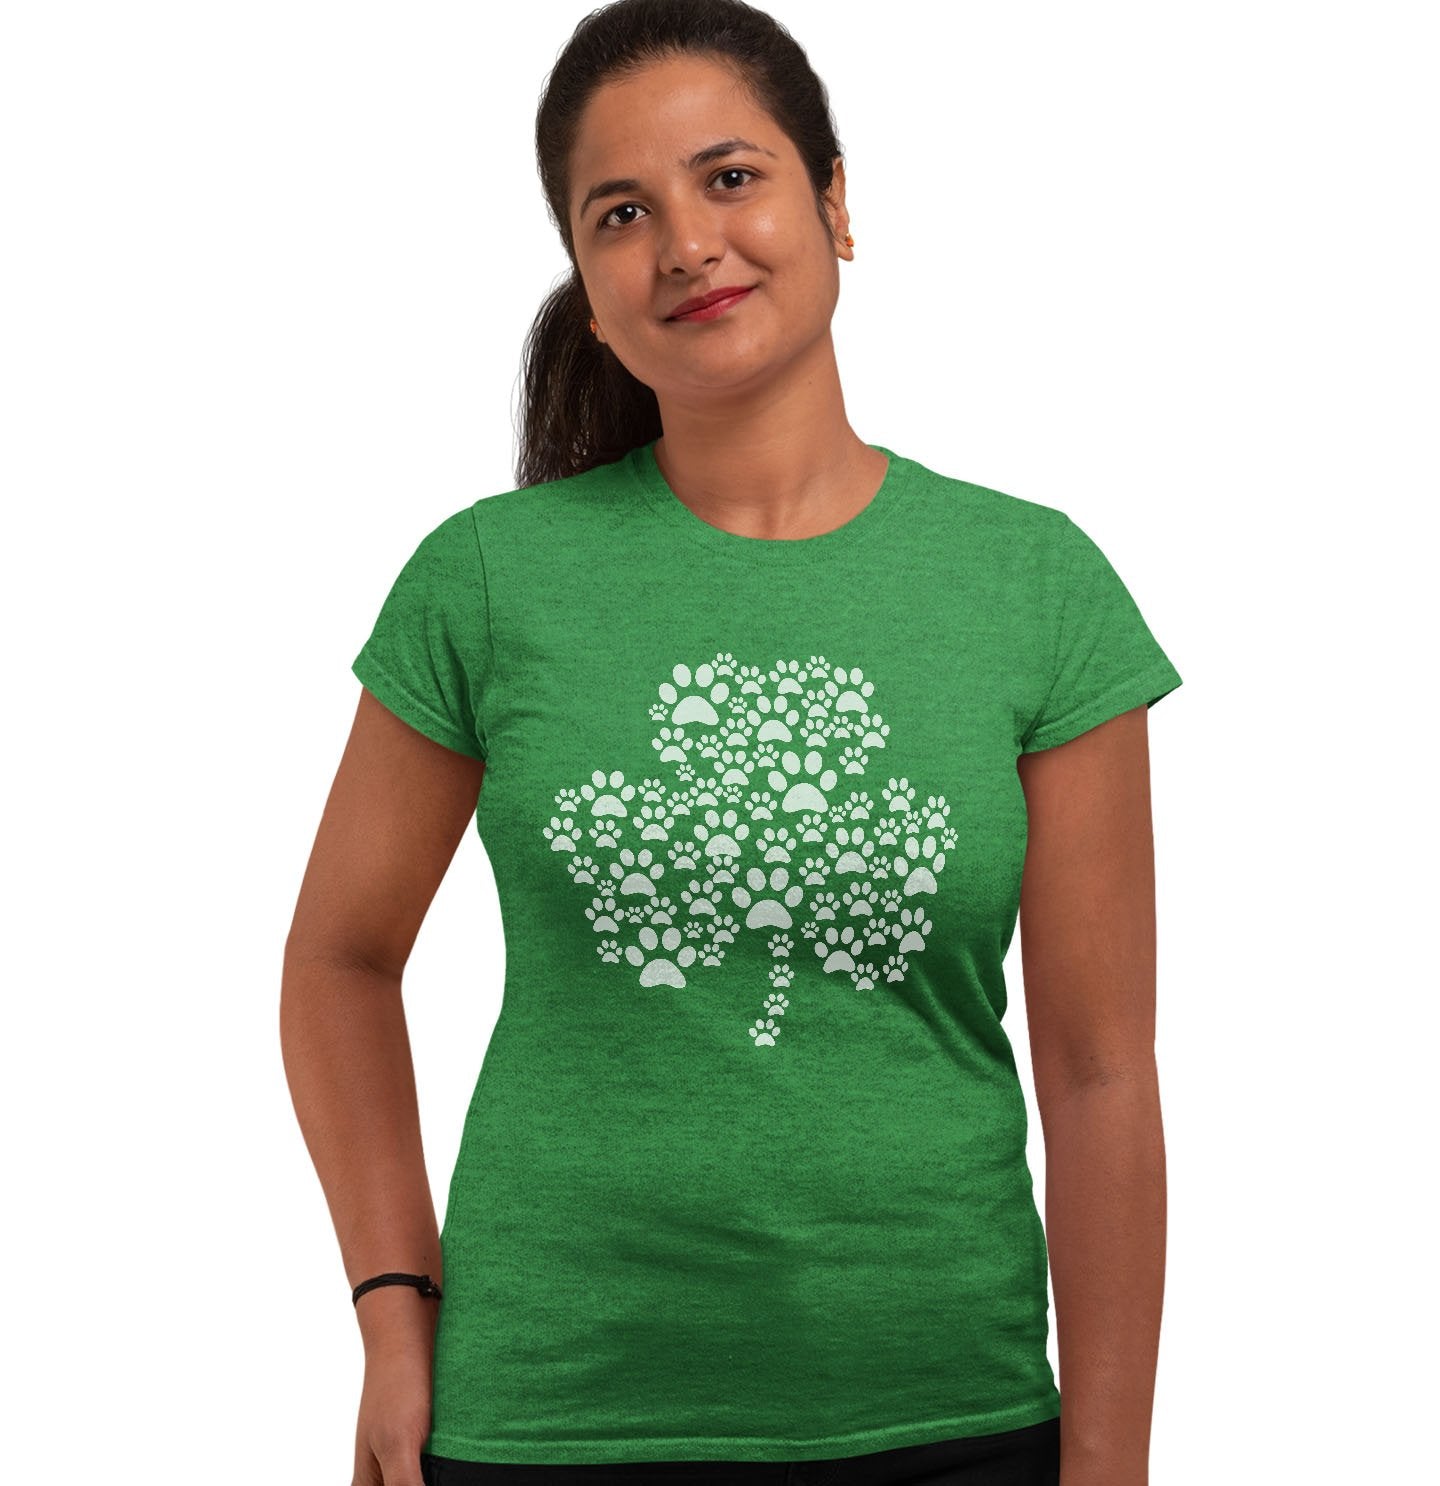 Green & White Shamrock Paw Print - Women's Fitted T-Shirt